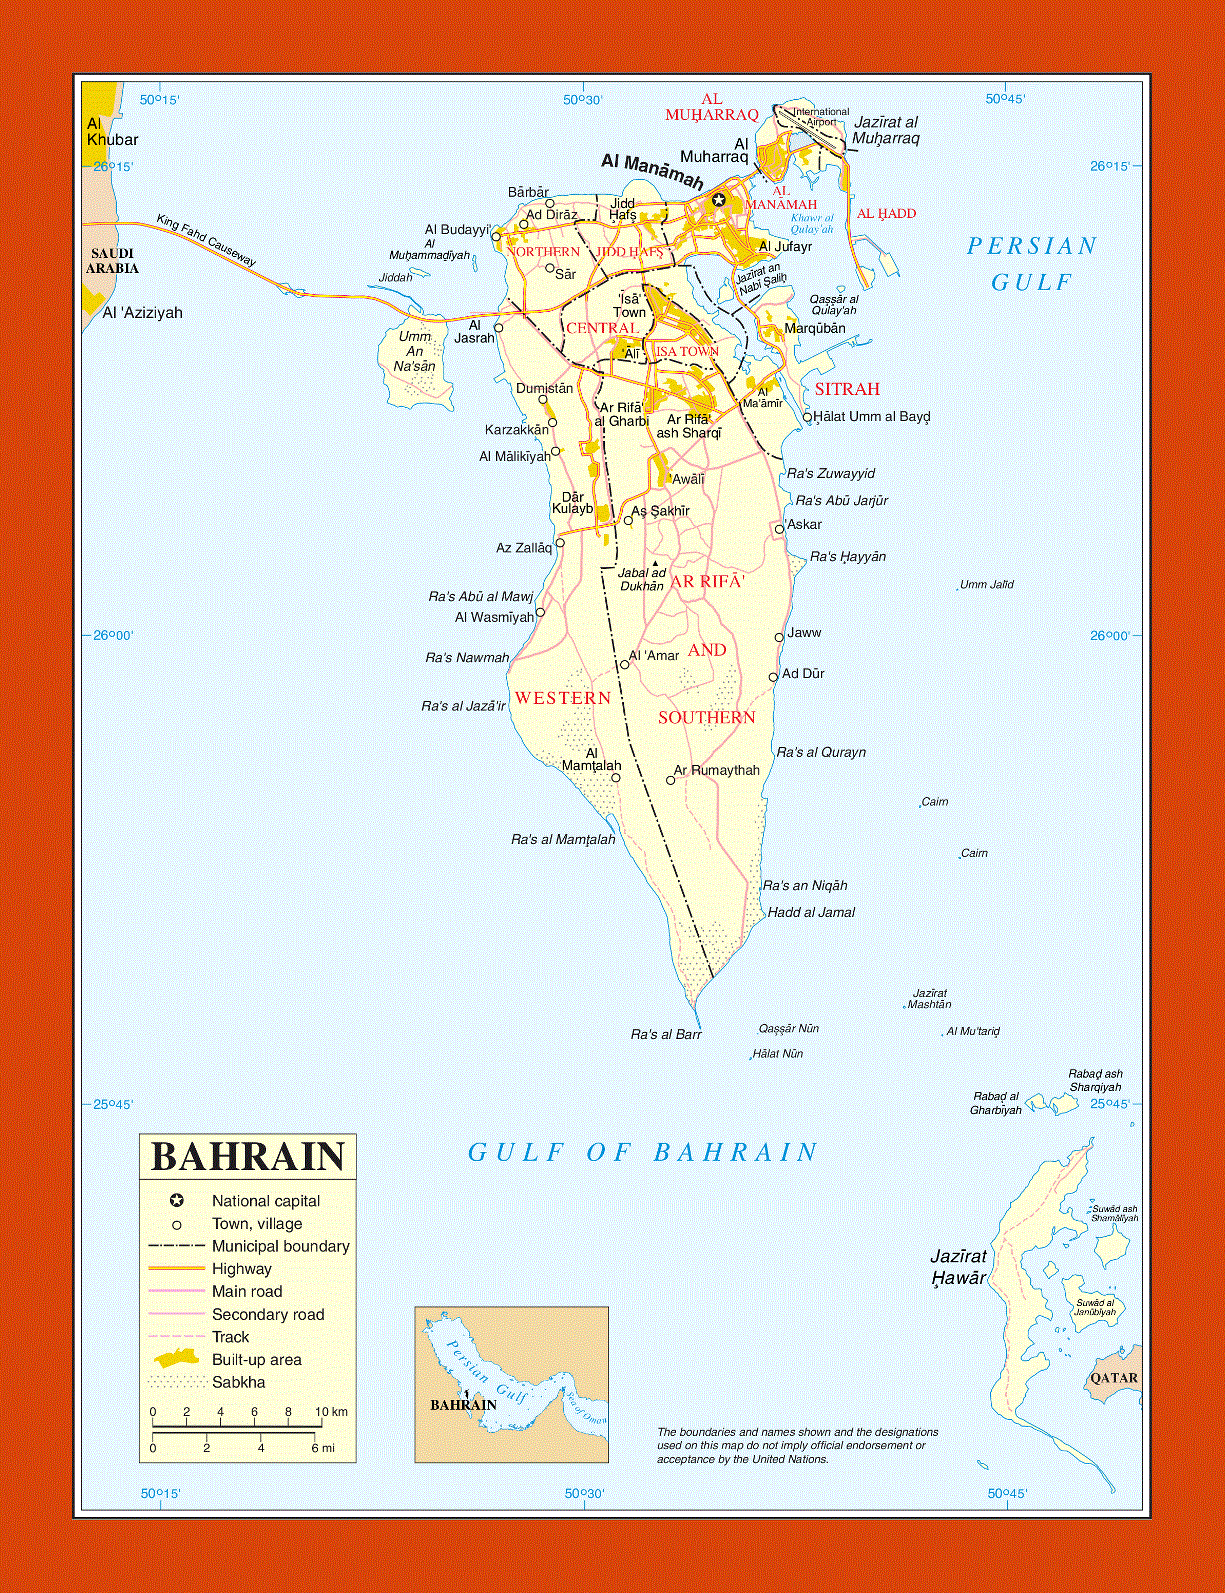 Political map of Bahrain